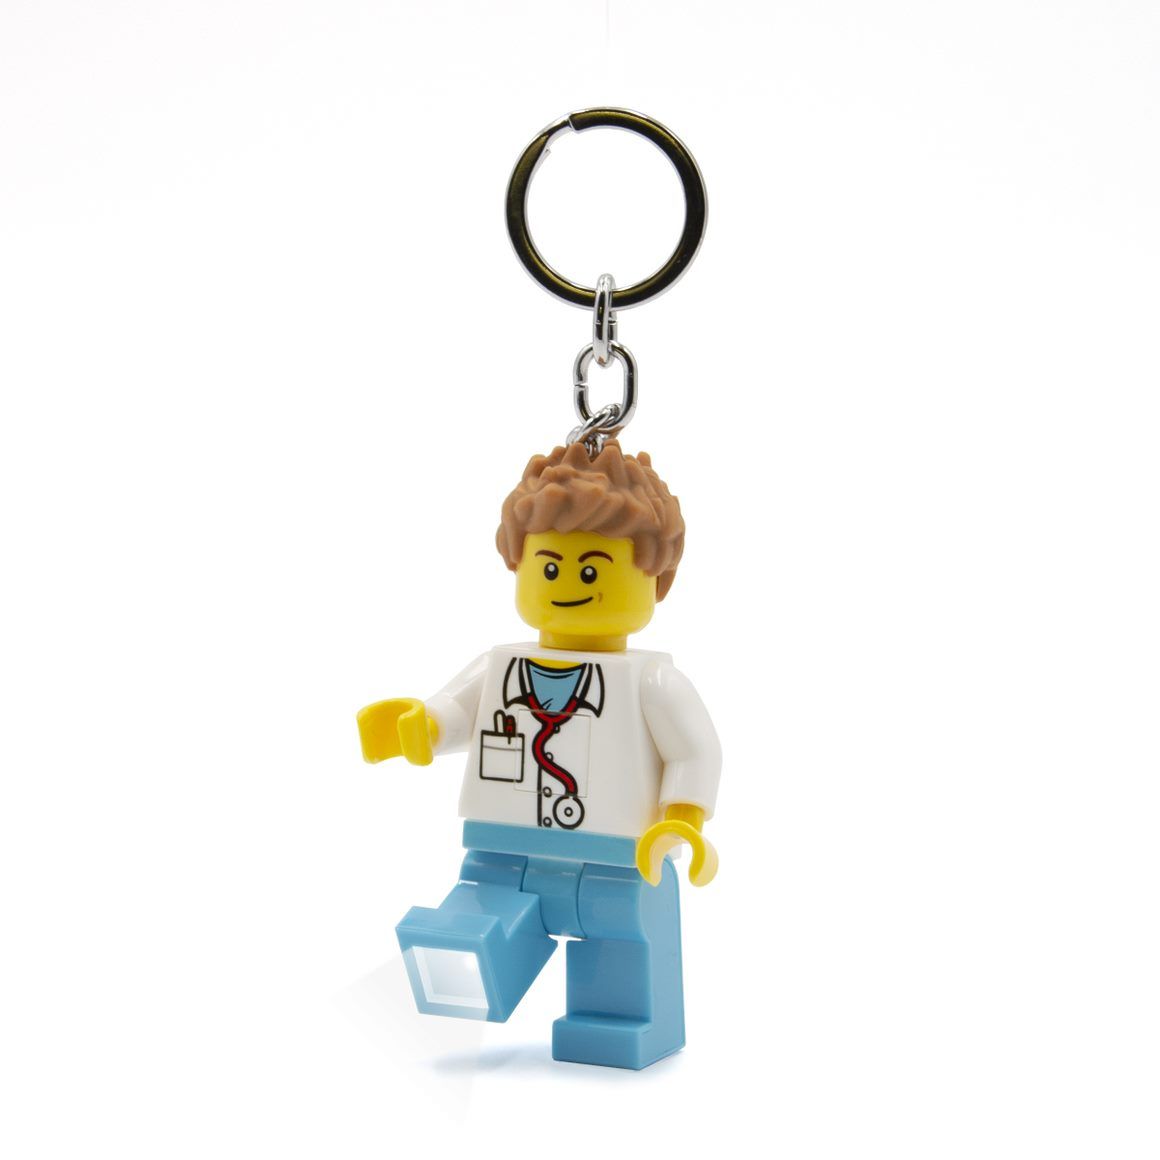 Lego Male Doctor Light Key Ring